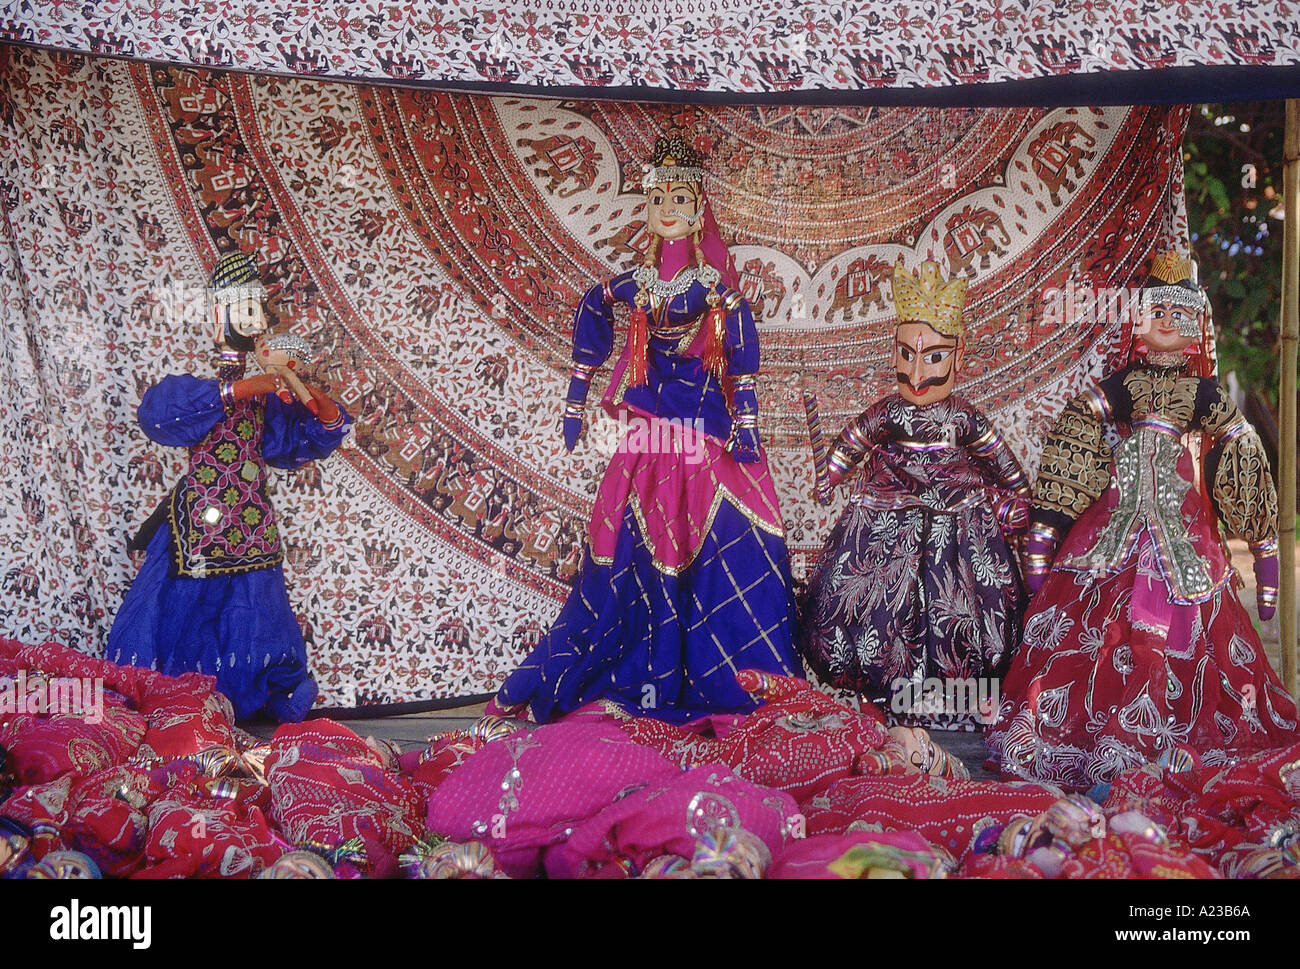 Kathputli or puppet show. Pushkar, Ajmer, Rajasthan, India. Stock Photo